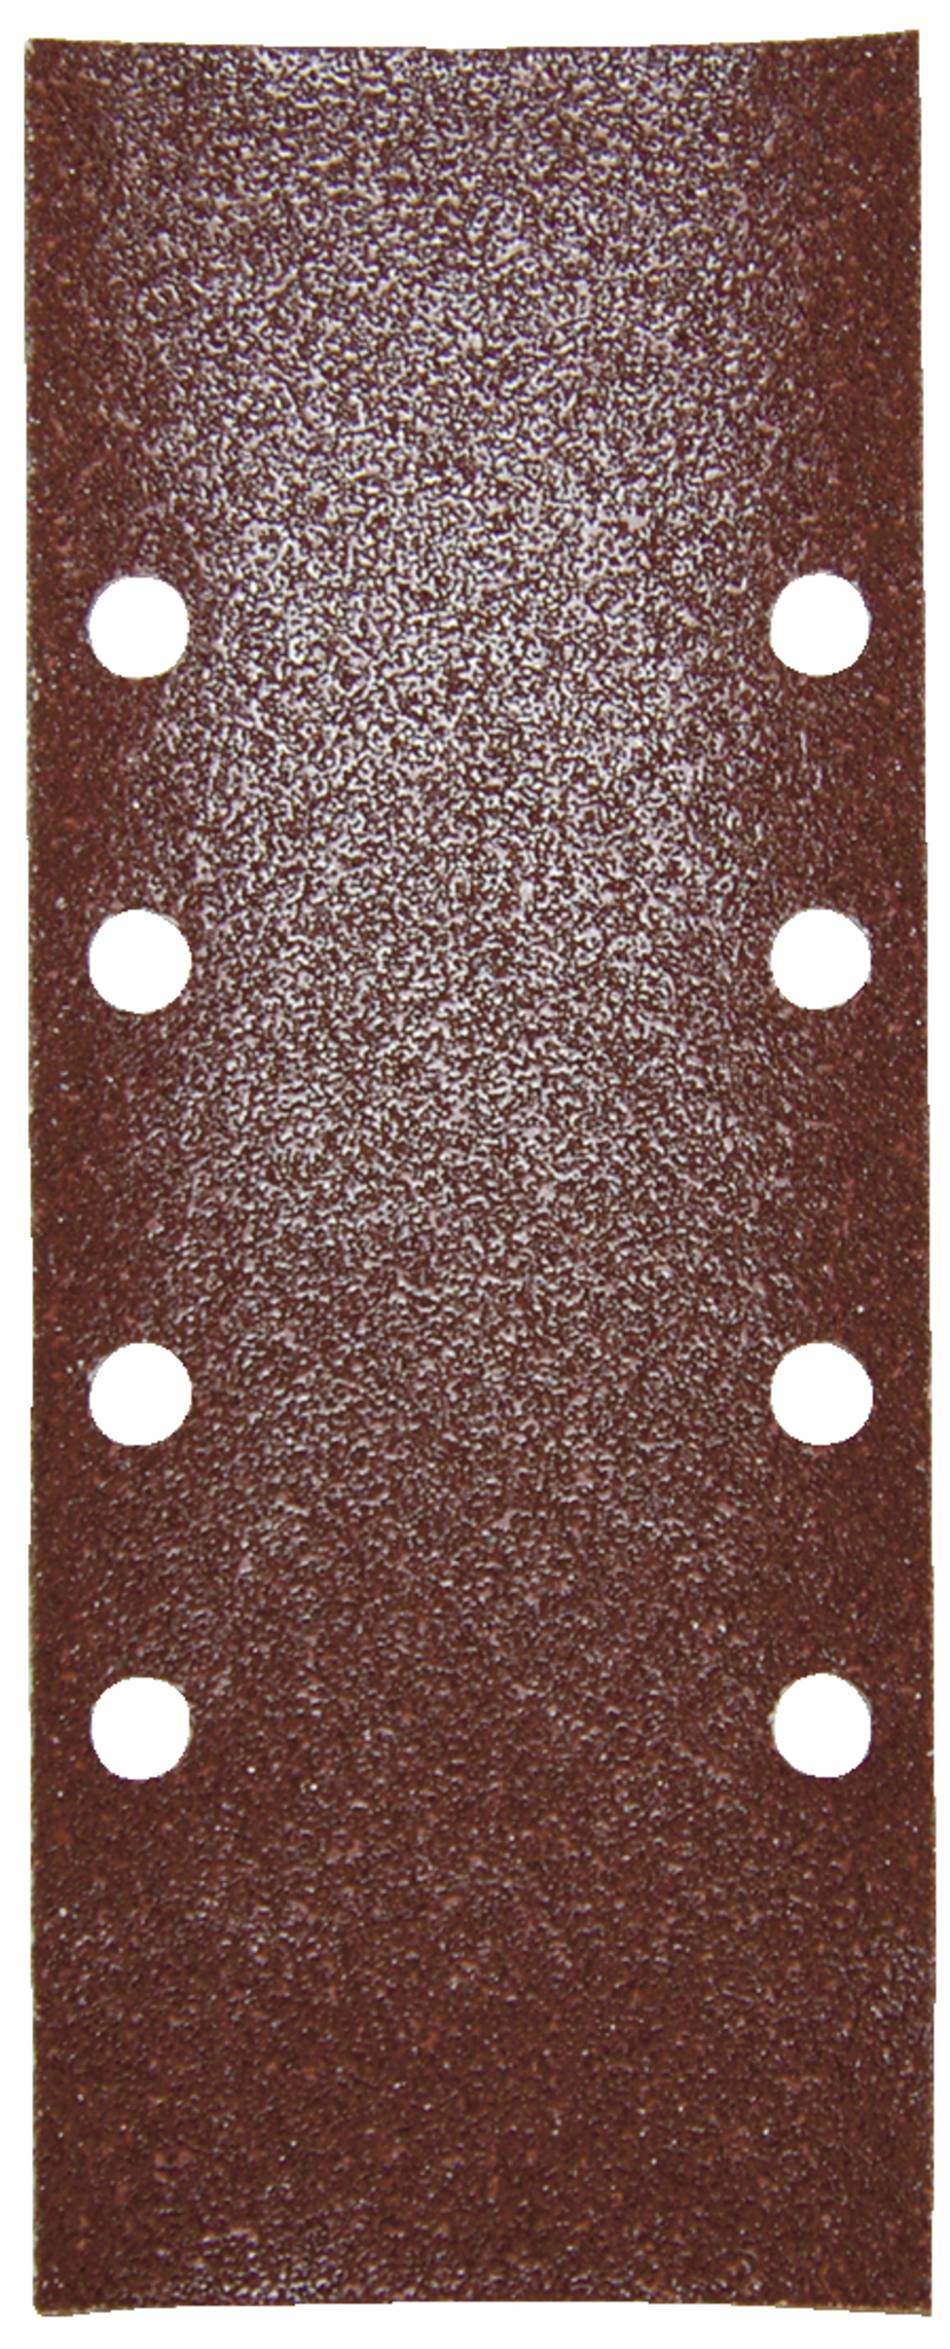 MAKITA - Schleifpapier - für Holz, Metall - 10 Stücke - rechteckig - Körnung: P150 - 93 mm x 230 mm